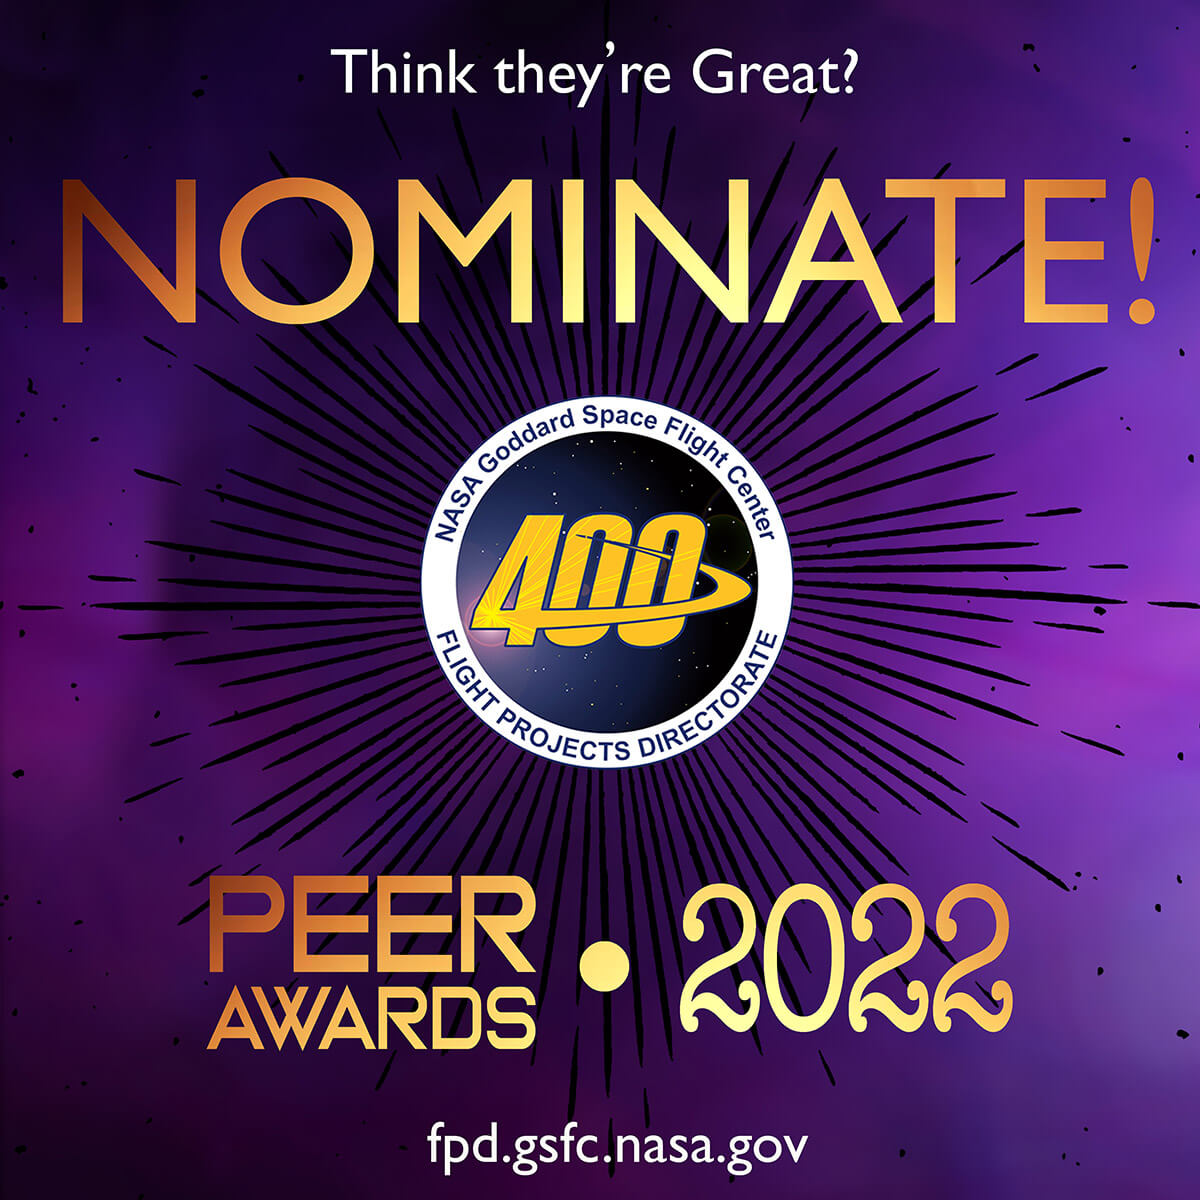 2021 peer awards